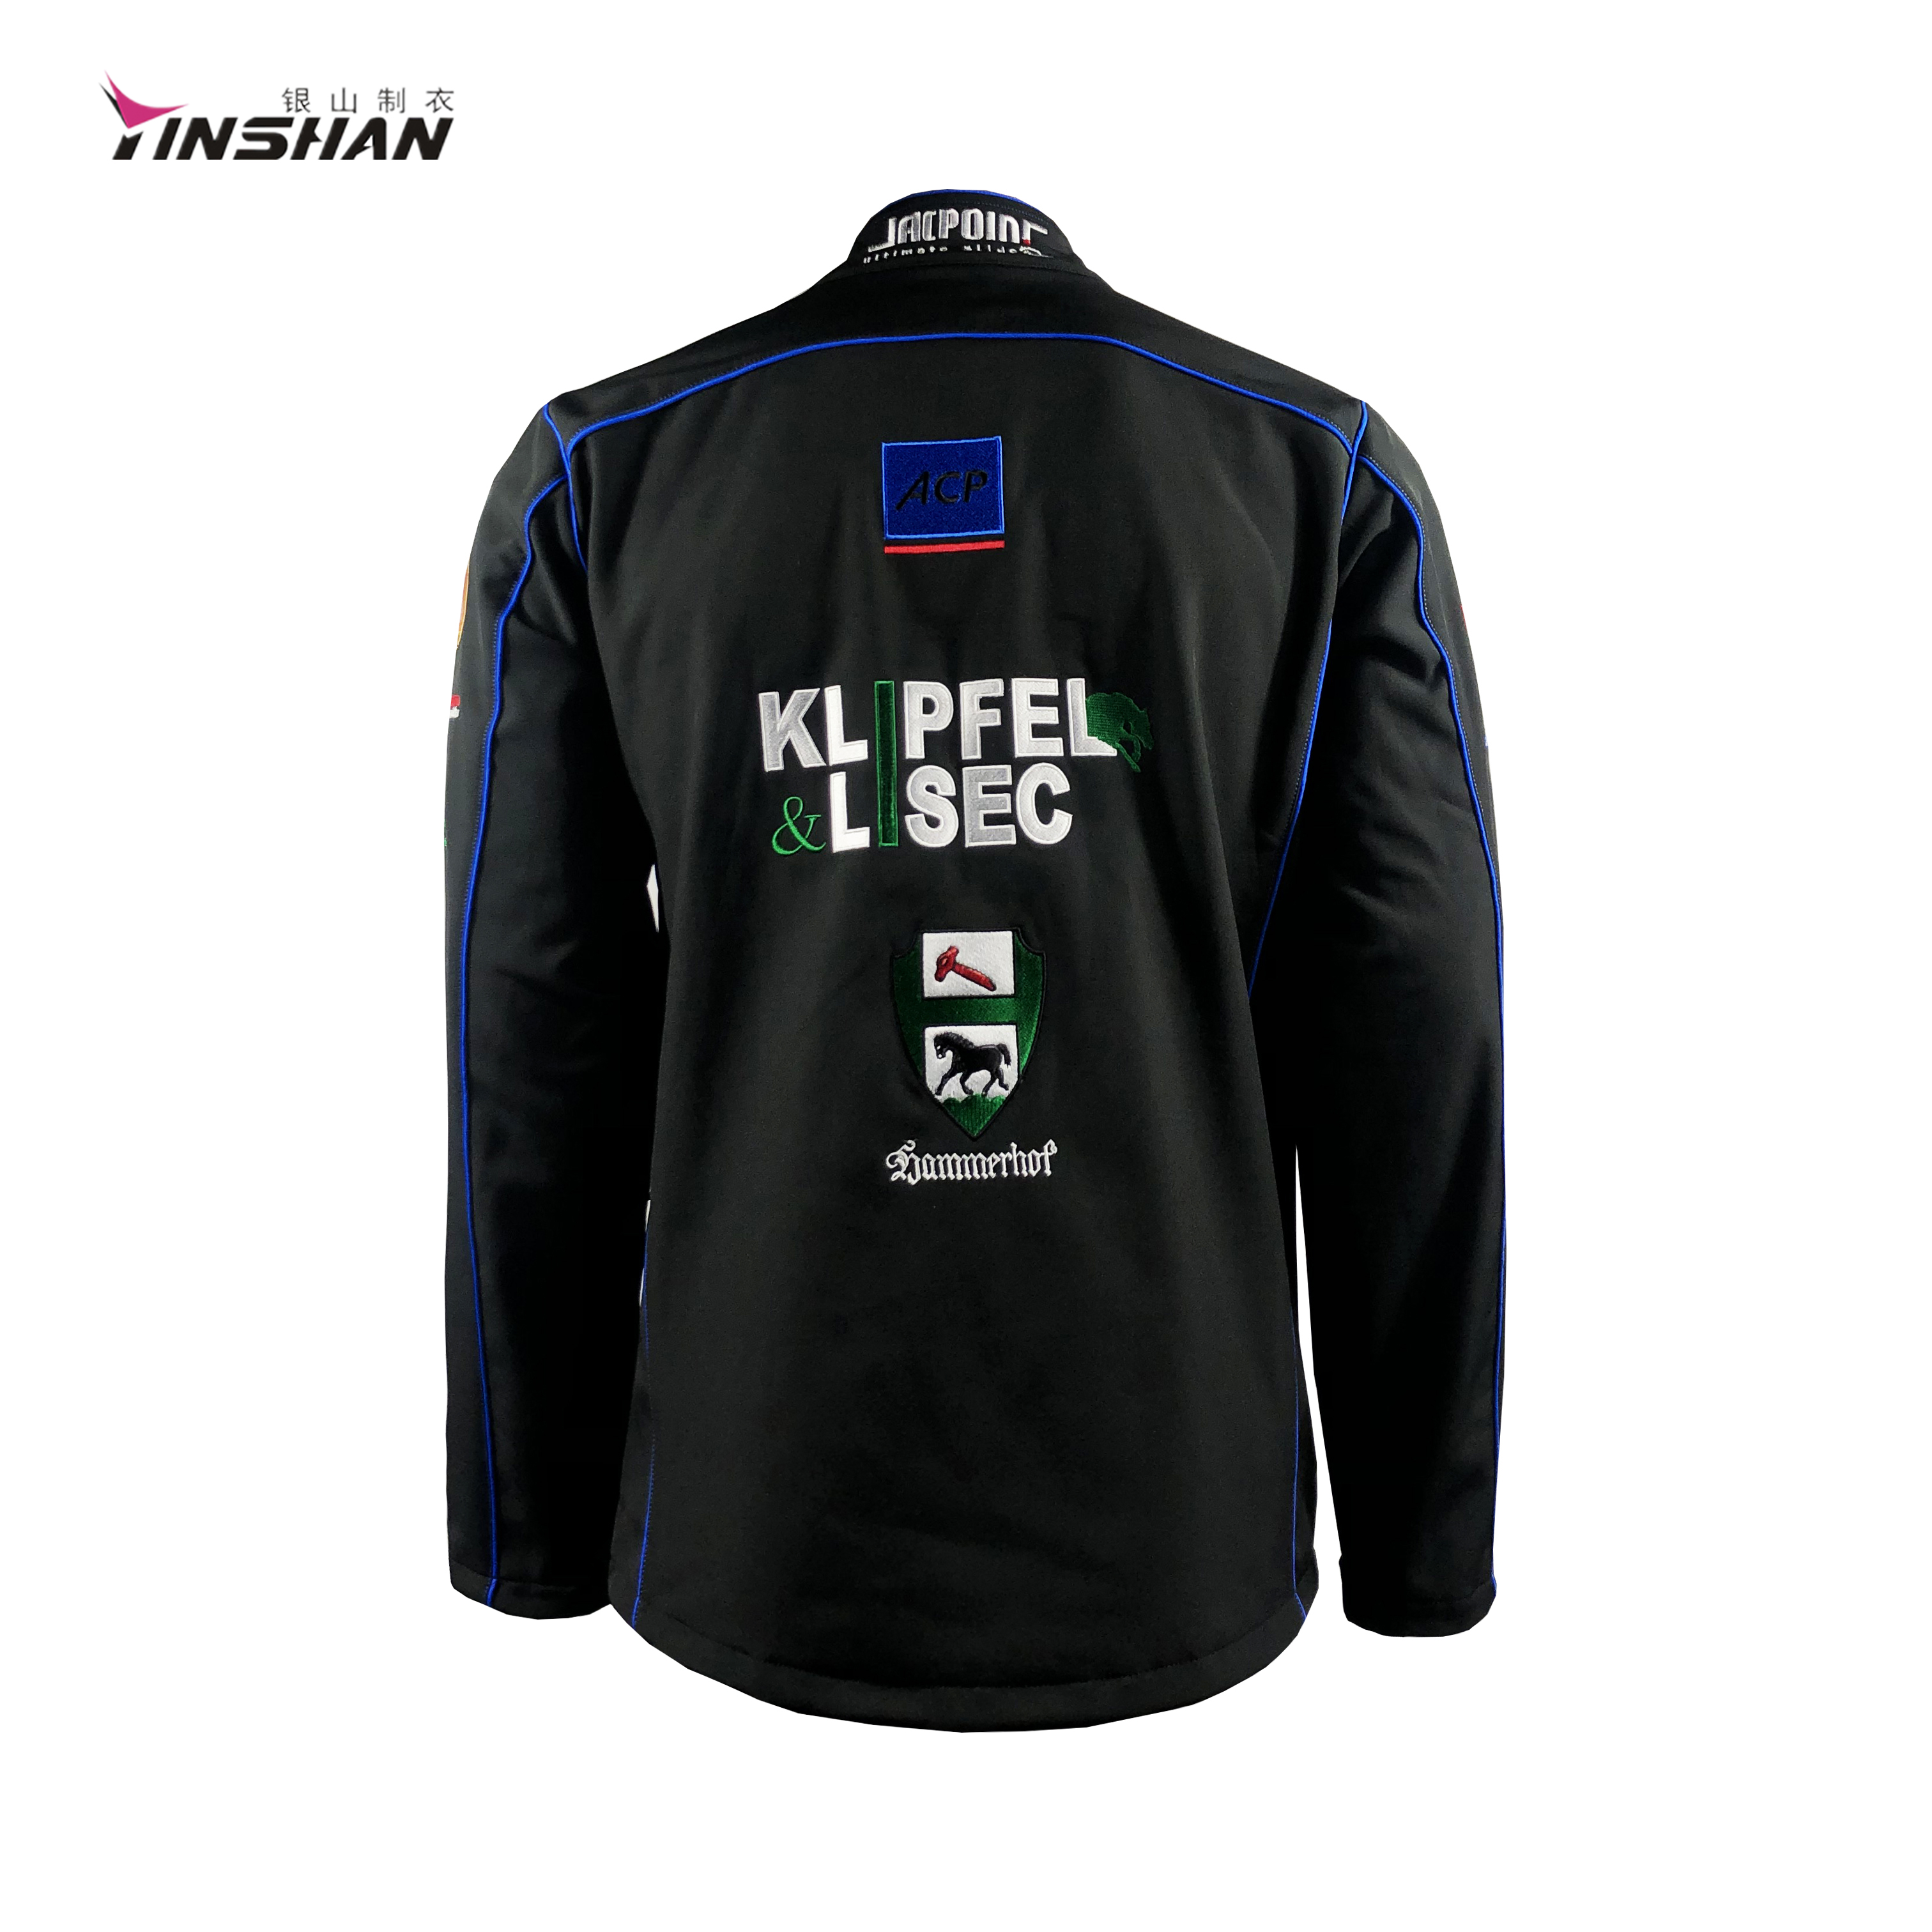 Men's racing jacket customization